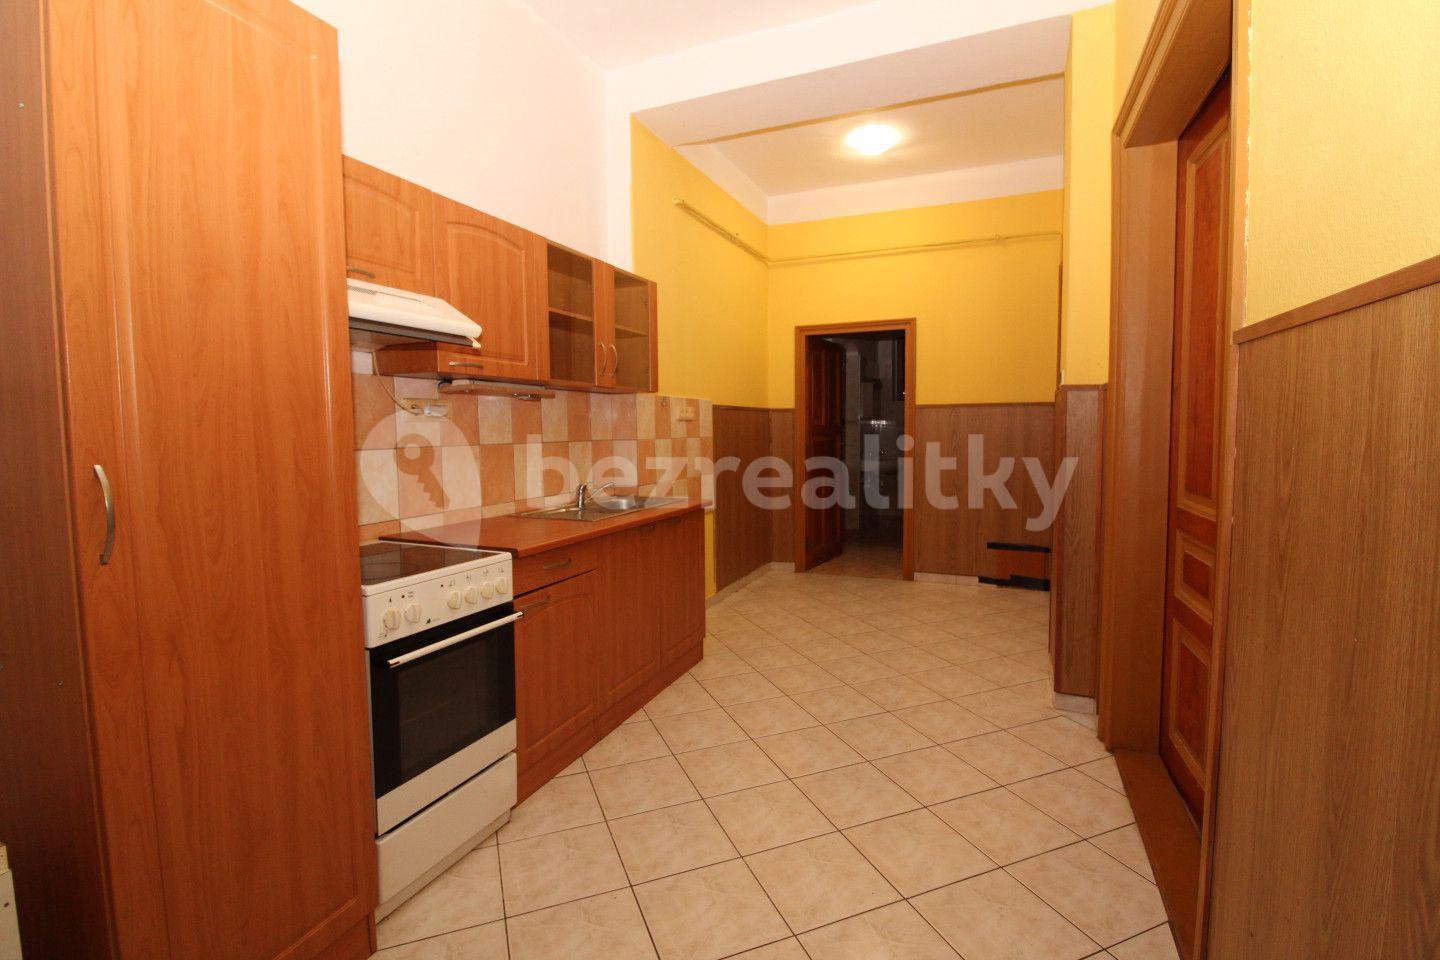 3 bedroom flat for sale, 75 m², Gen. Svobody, Nový Bor, Liberecký Region